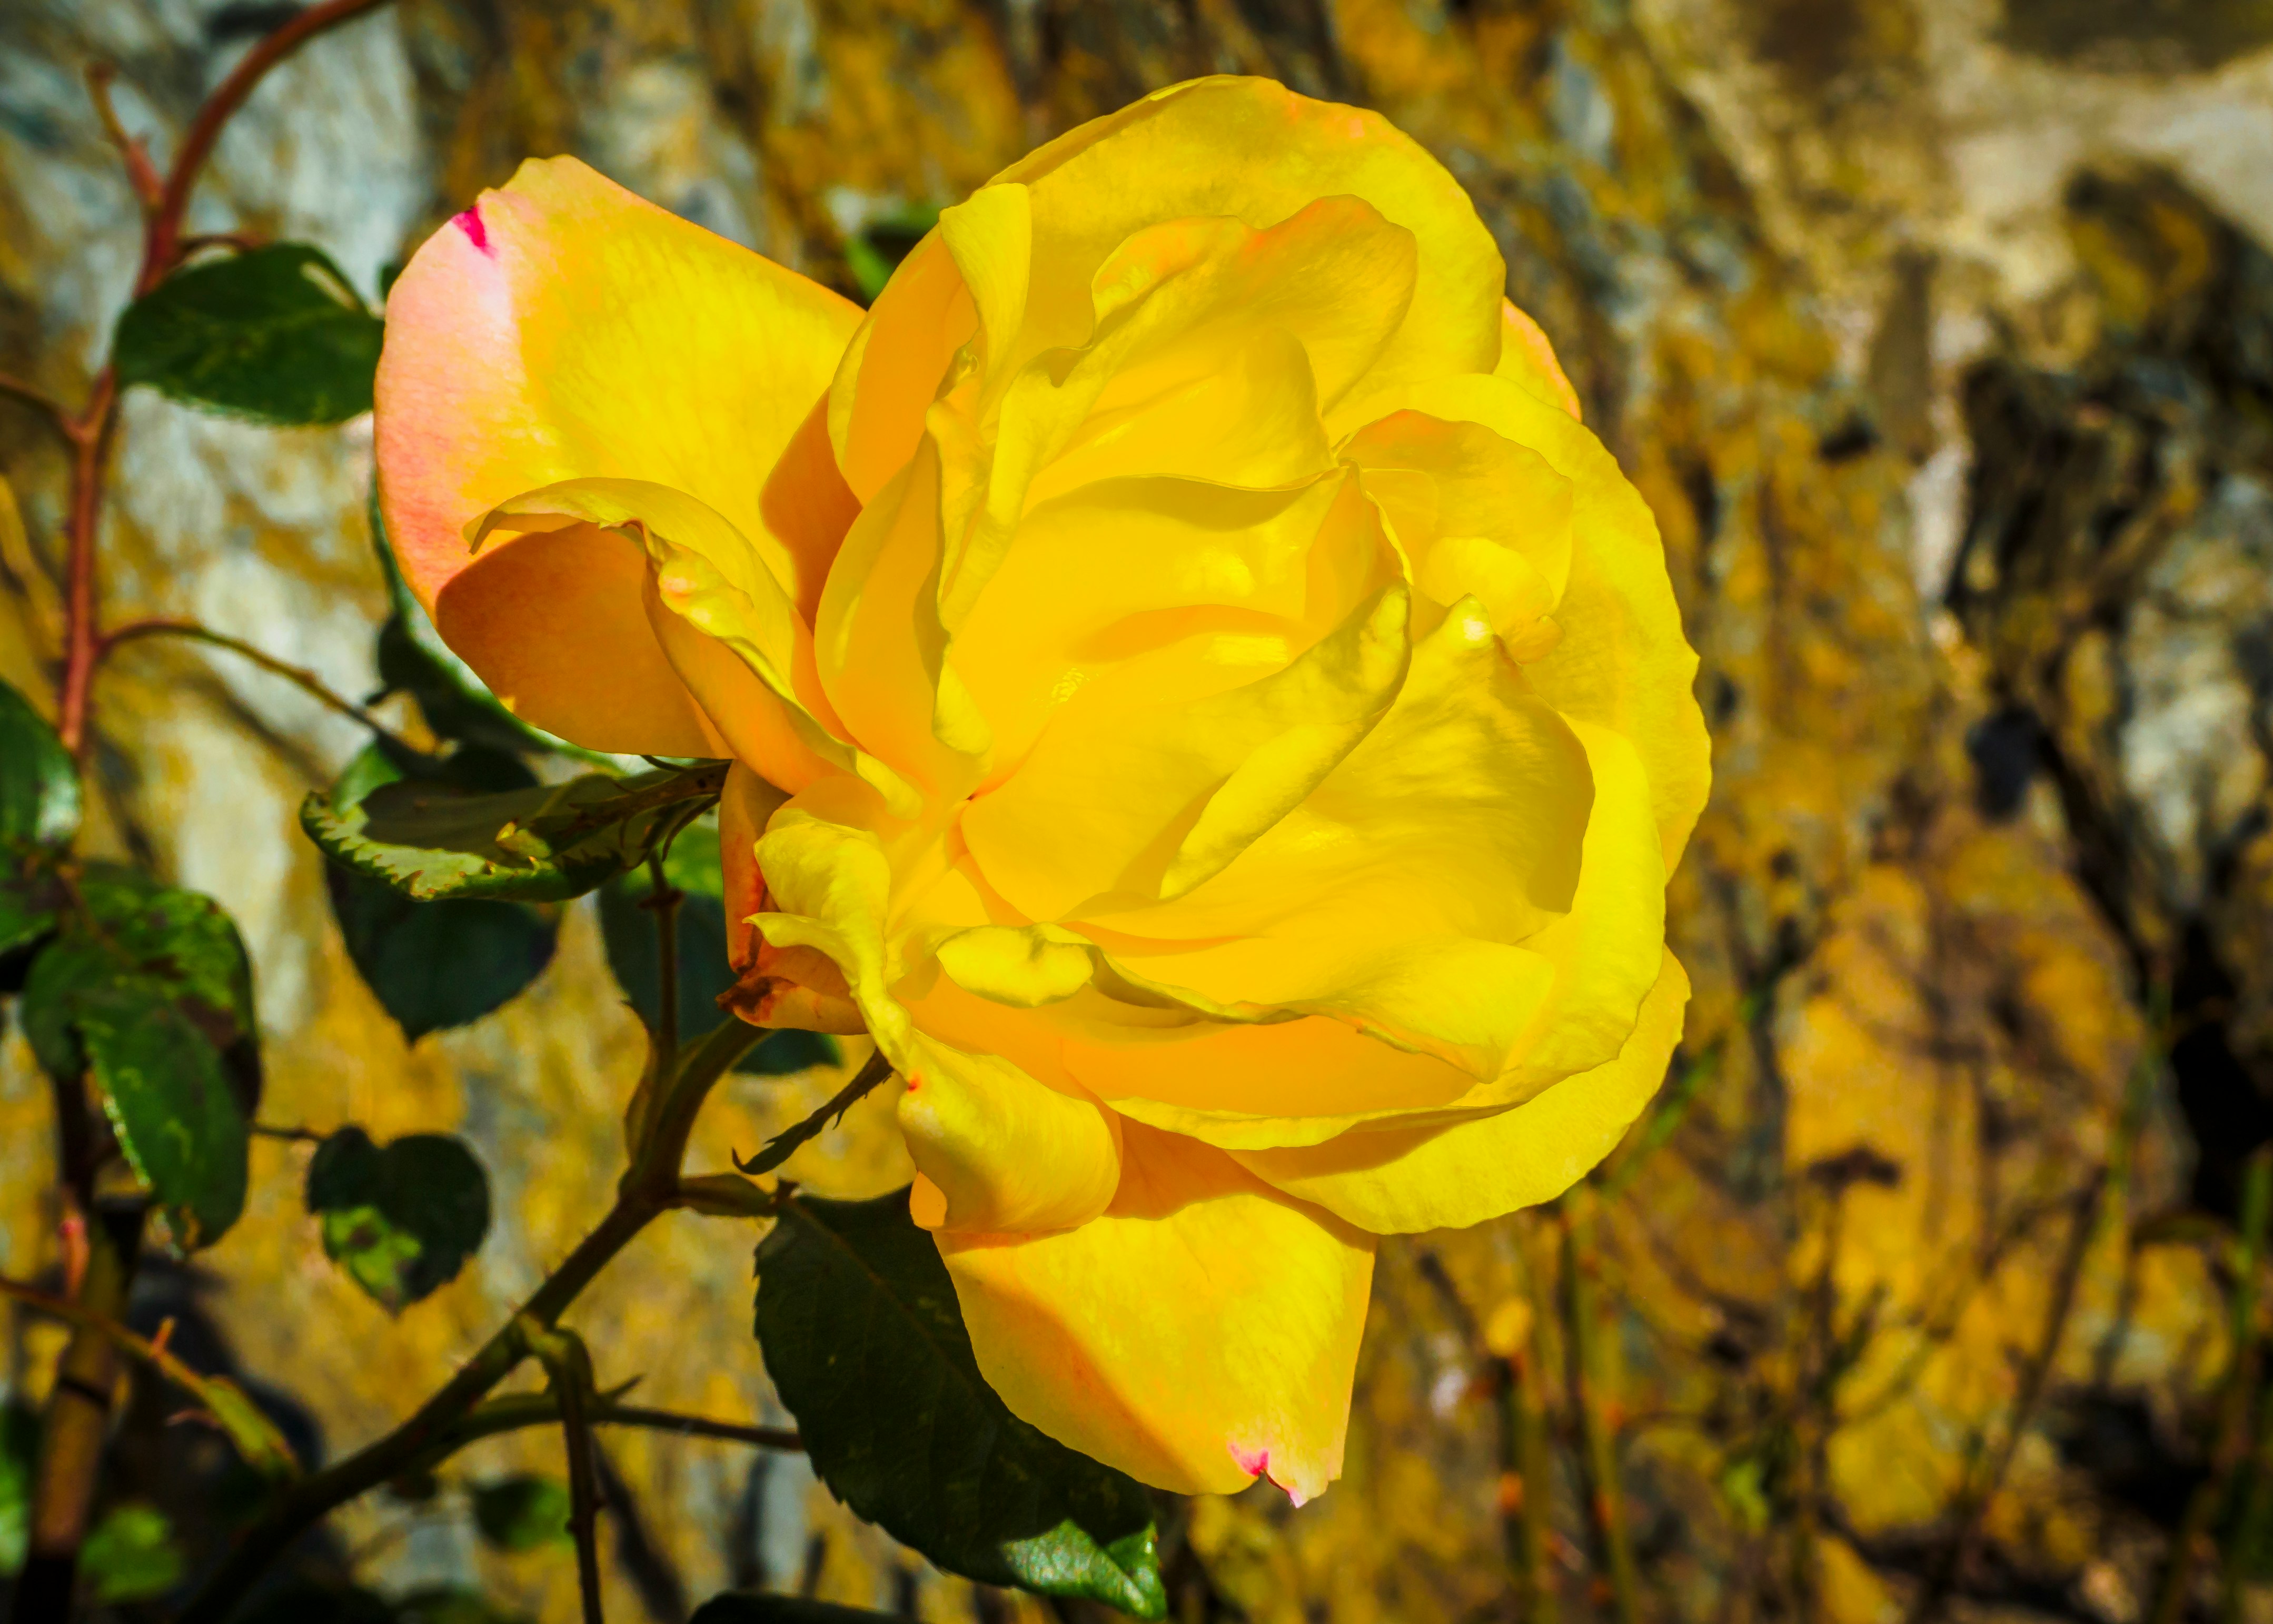 Yellow rose at Sacra di San Michele